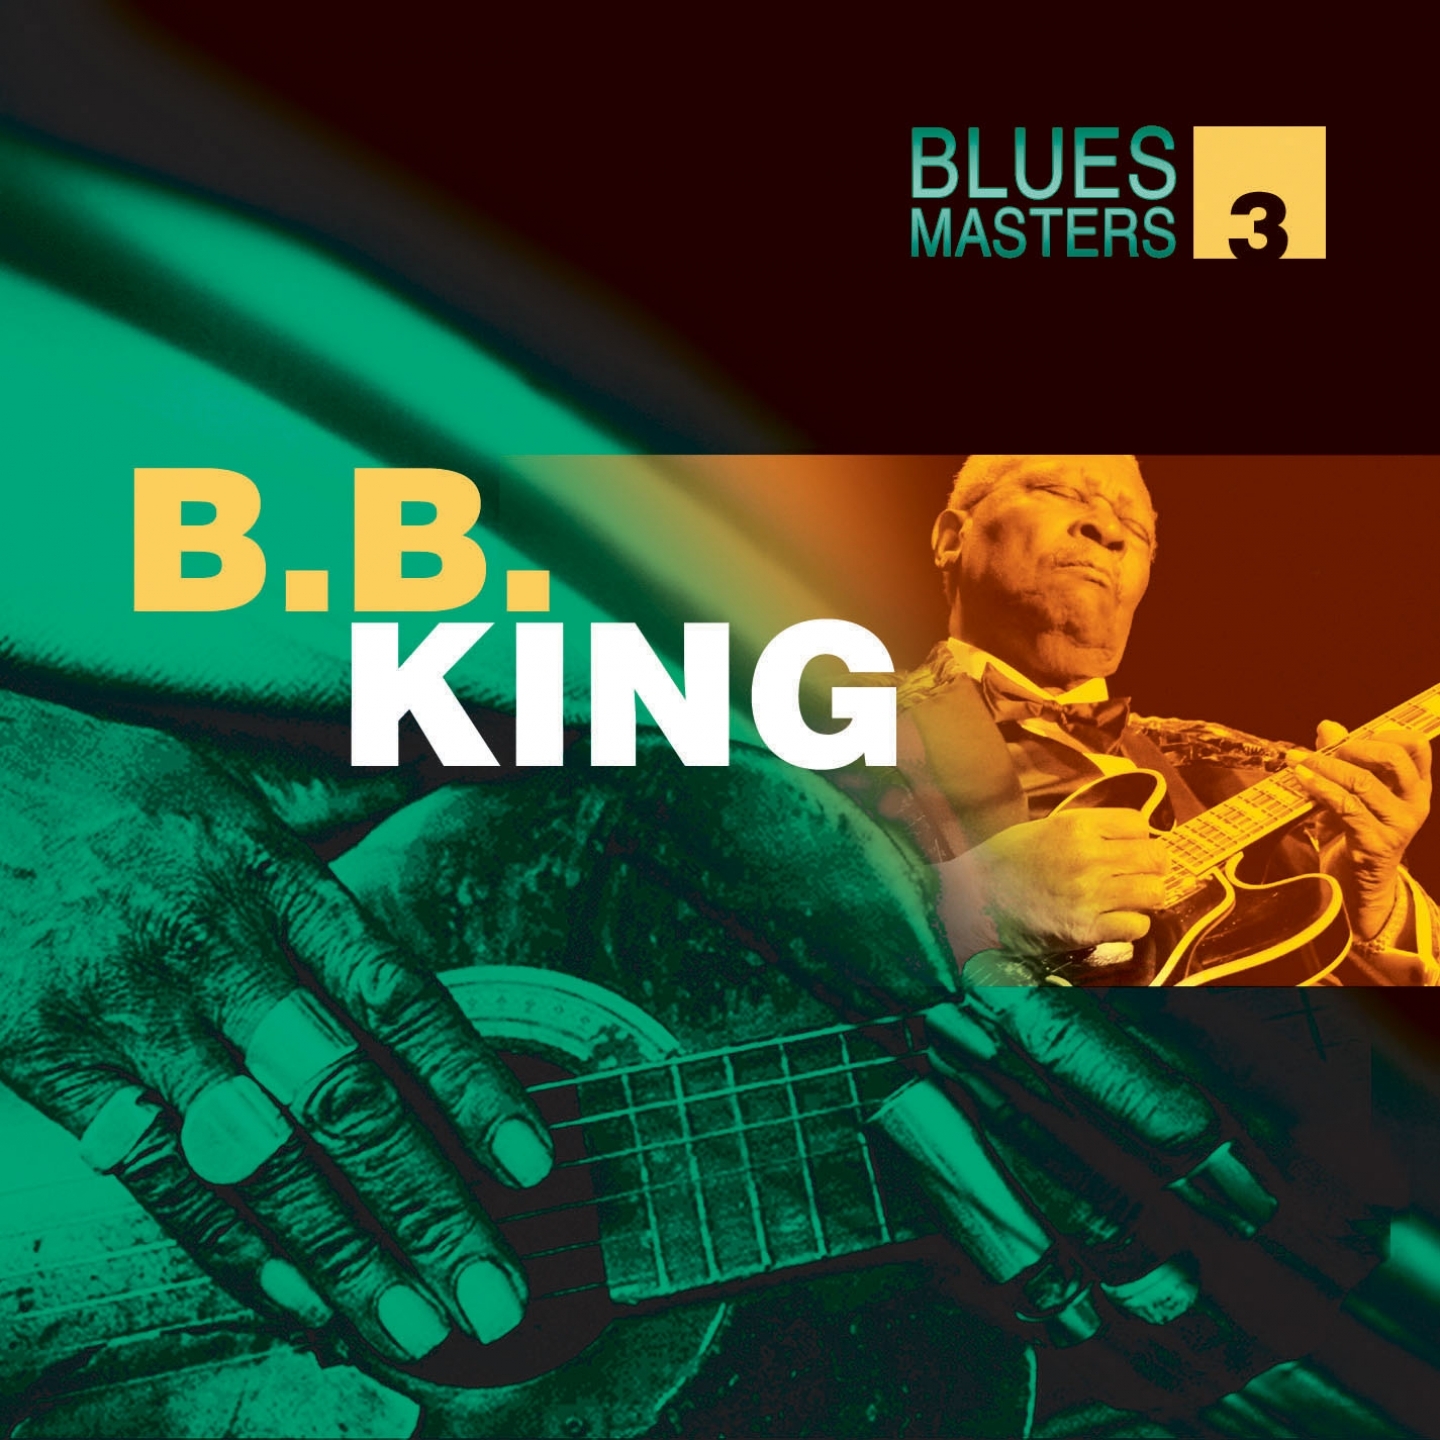 Blues Masters Vol. 3 (B.B. King)